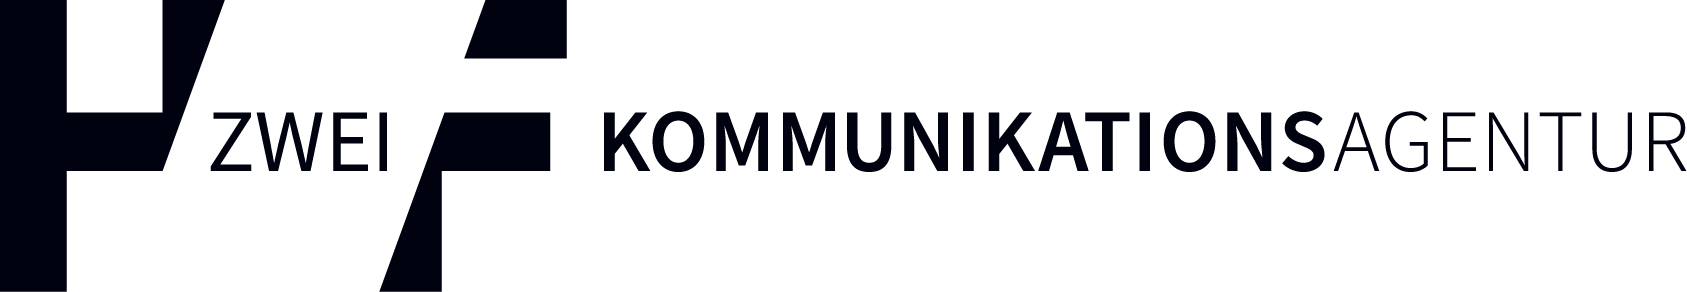 Logo - H2F Kommunikationsagentur